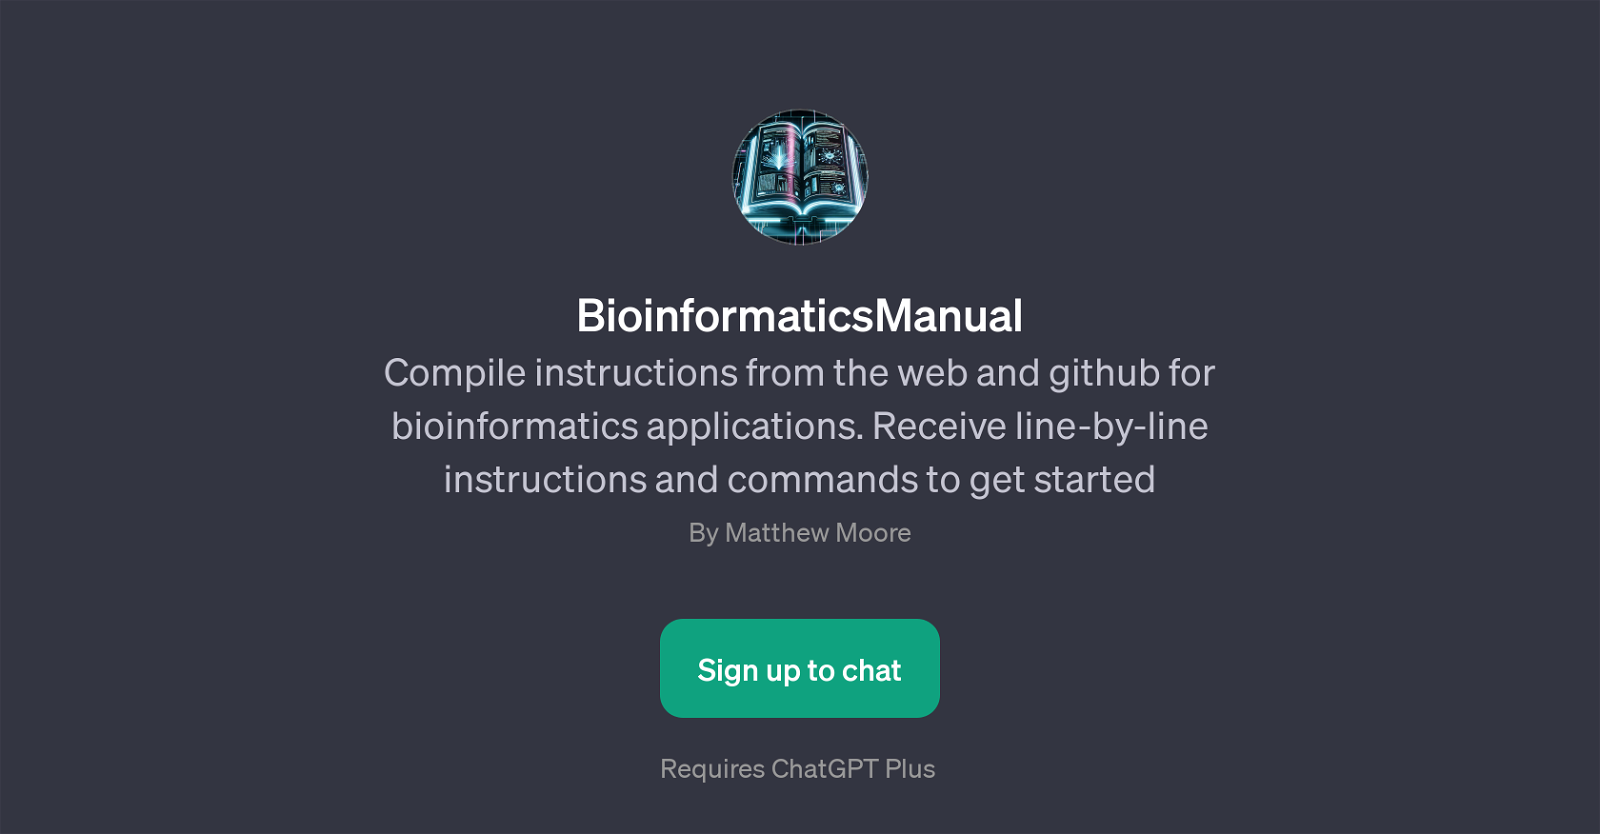 BioinformaticsManual website